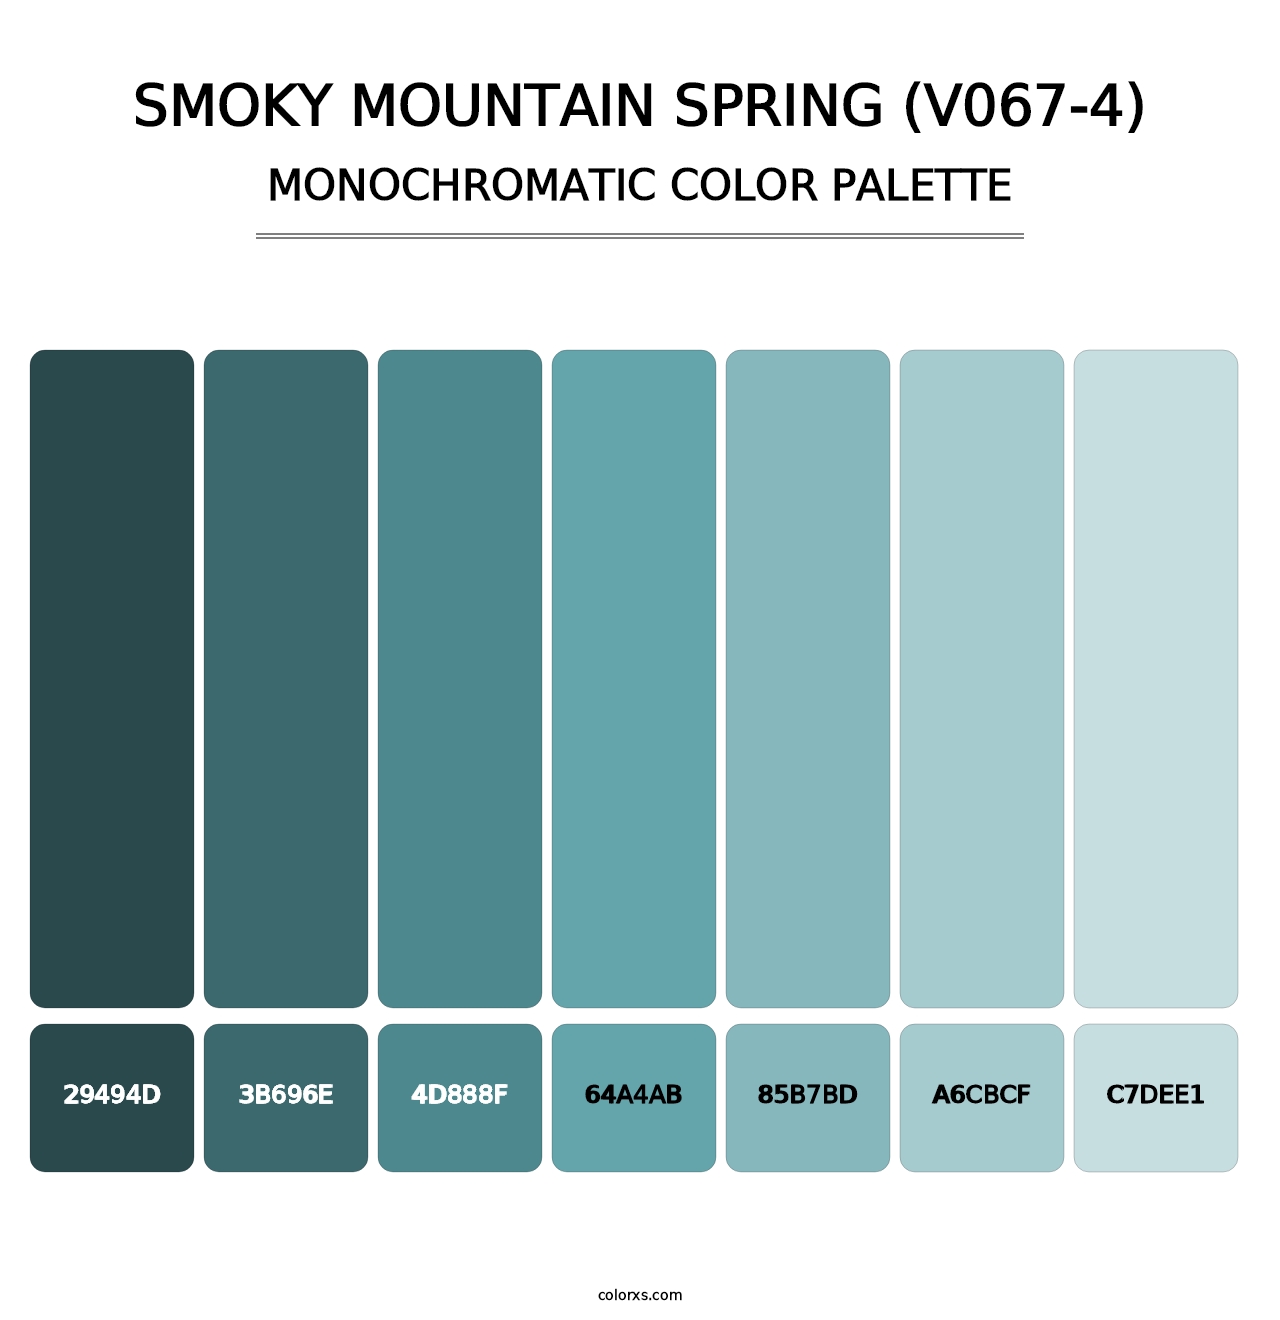 Smoky Mountain Spring (V067-4) - Monochromatic Color Palette